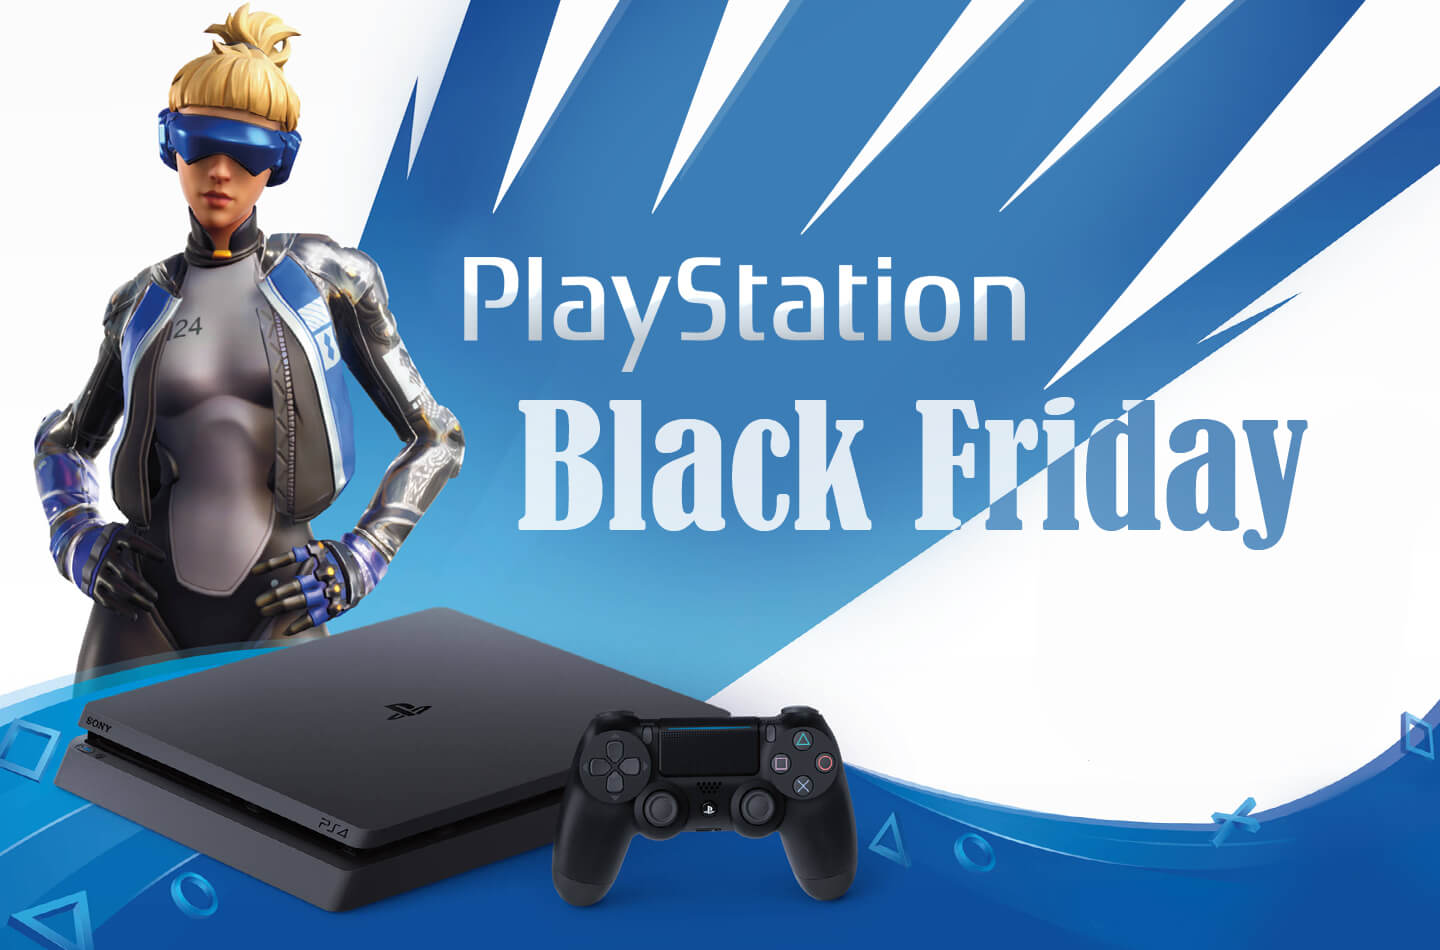 Indiener Bewolkt weduwnaar PlayStation kopen met korting op Black Friday 2019 | LetsGoDigital